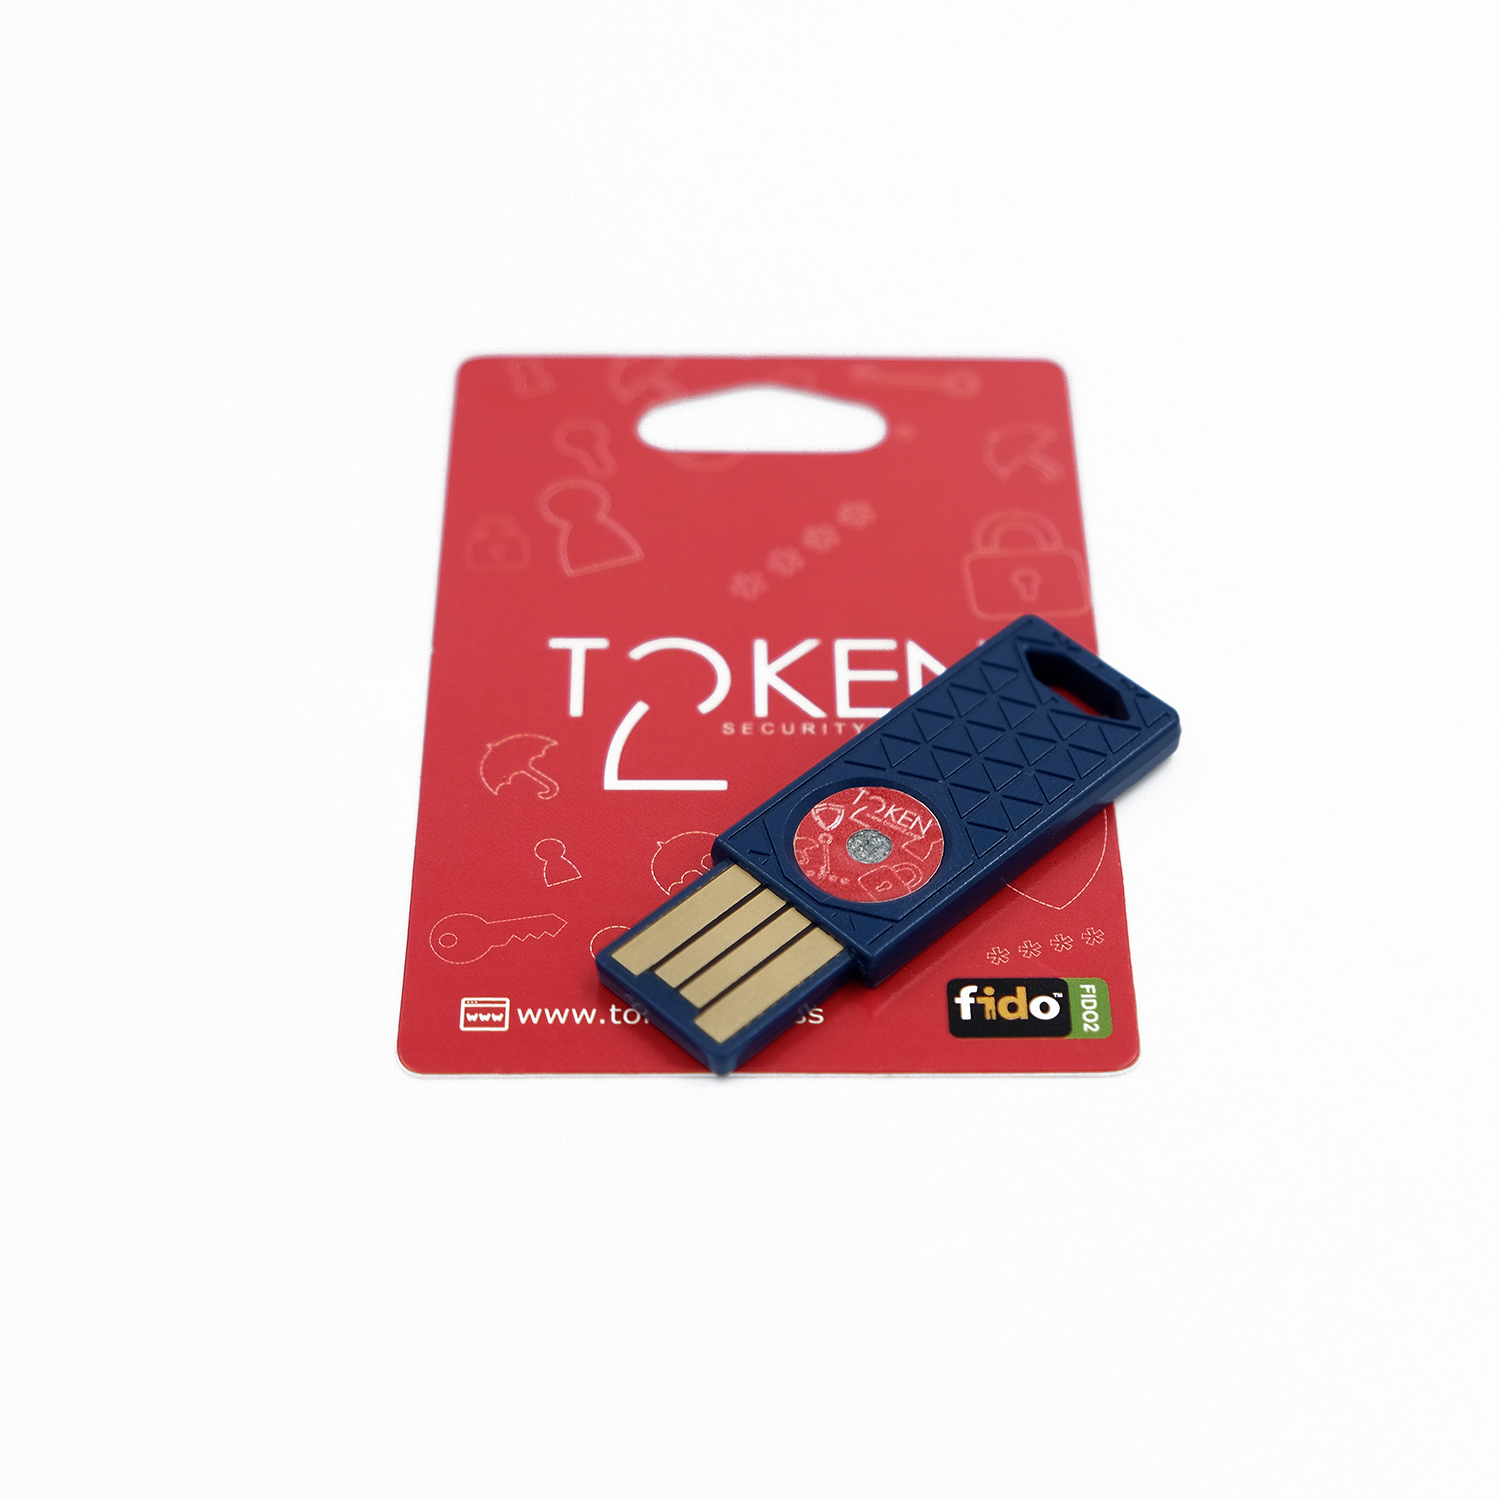 Token2, Token2 T2F2 FIDO2 and U2F Security Key